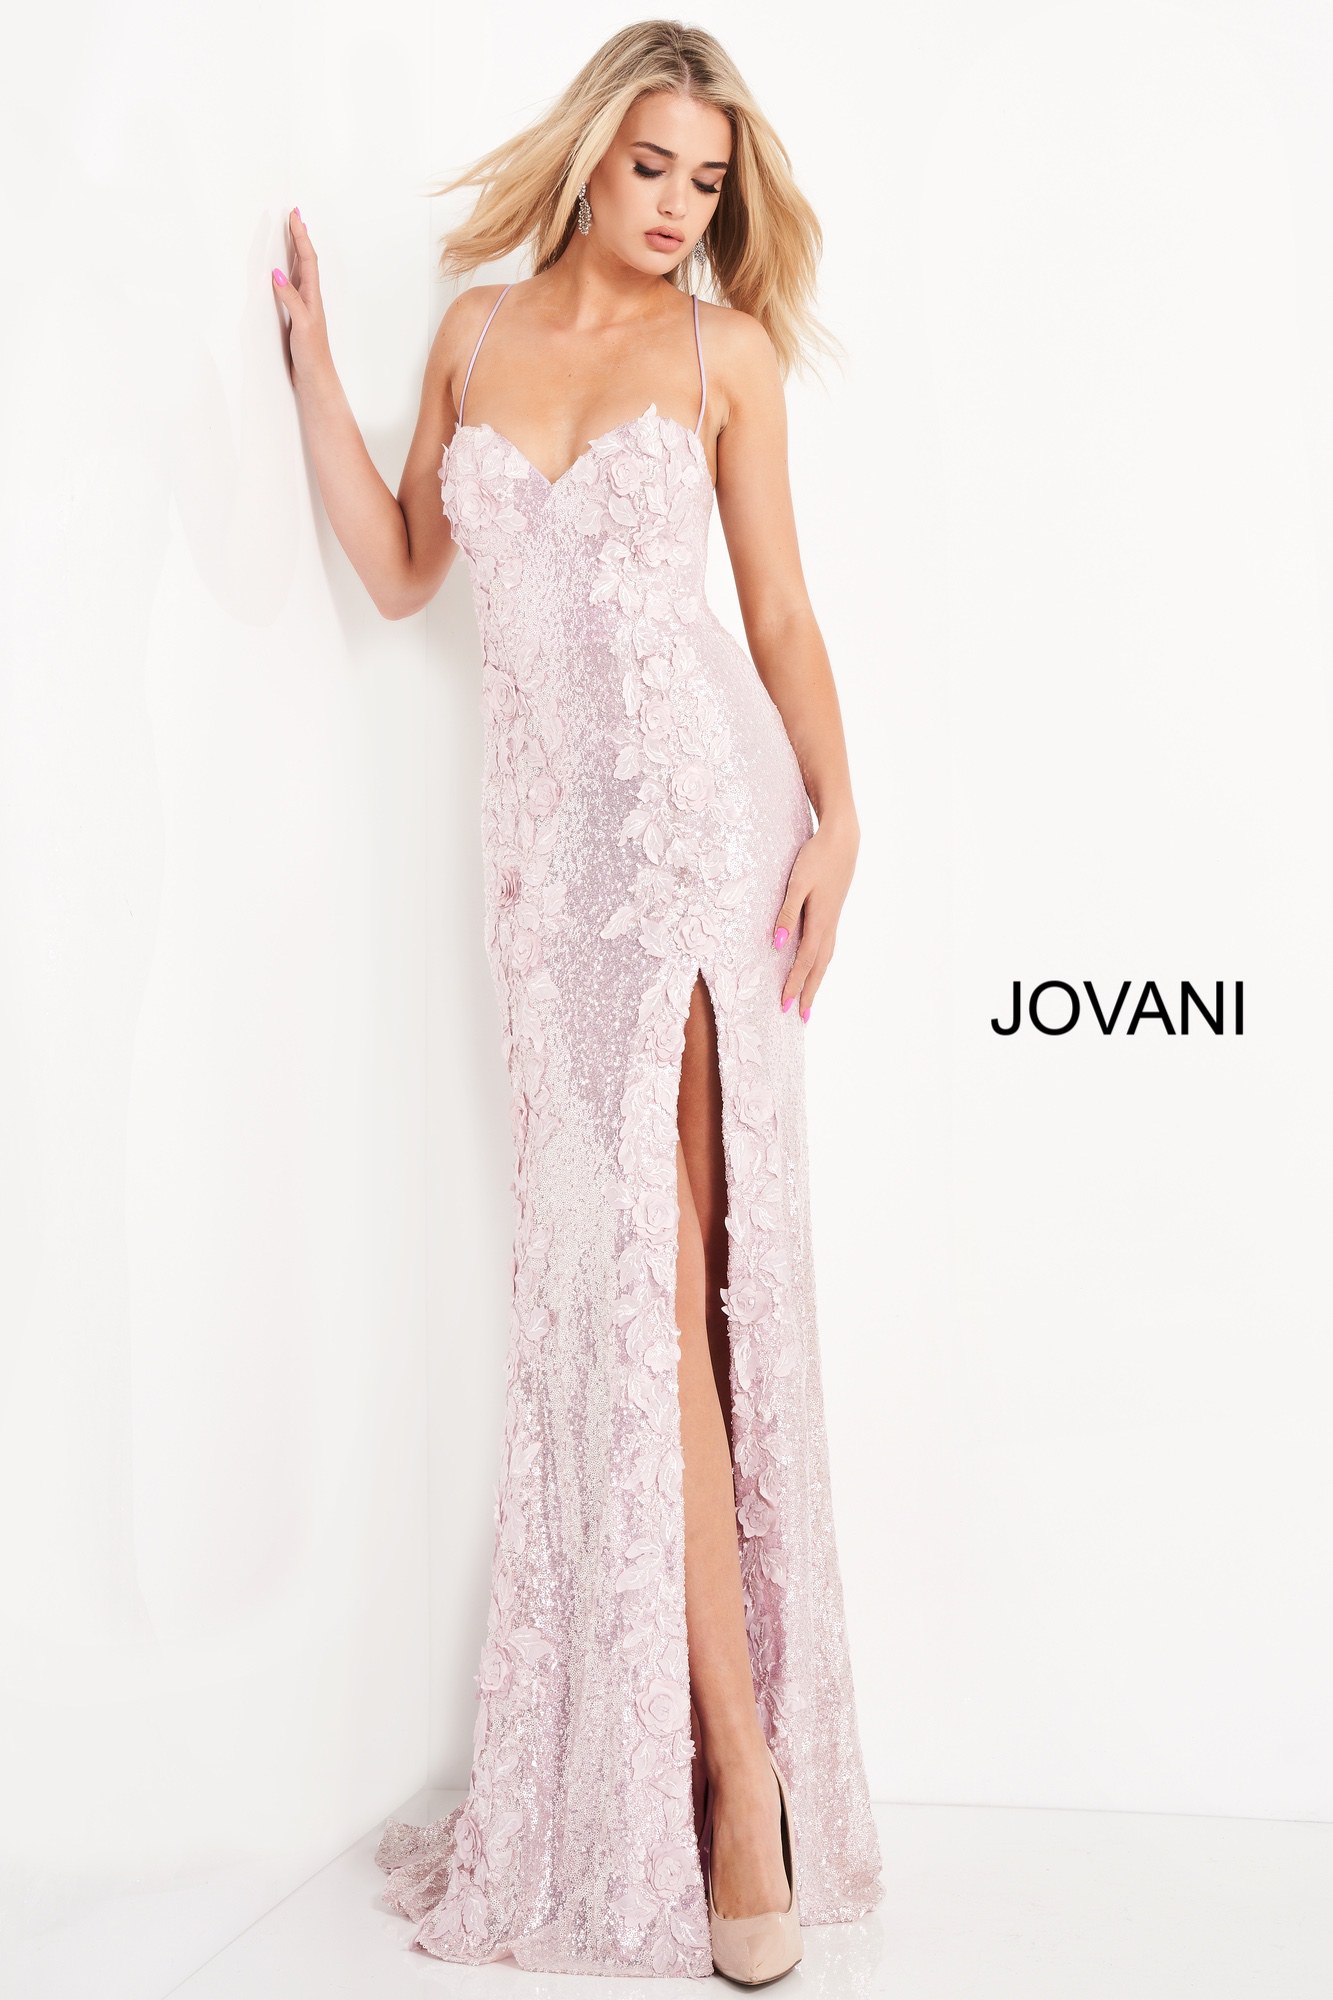 Jovani Pink Sequin Floral Applique Prom Dress